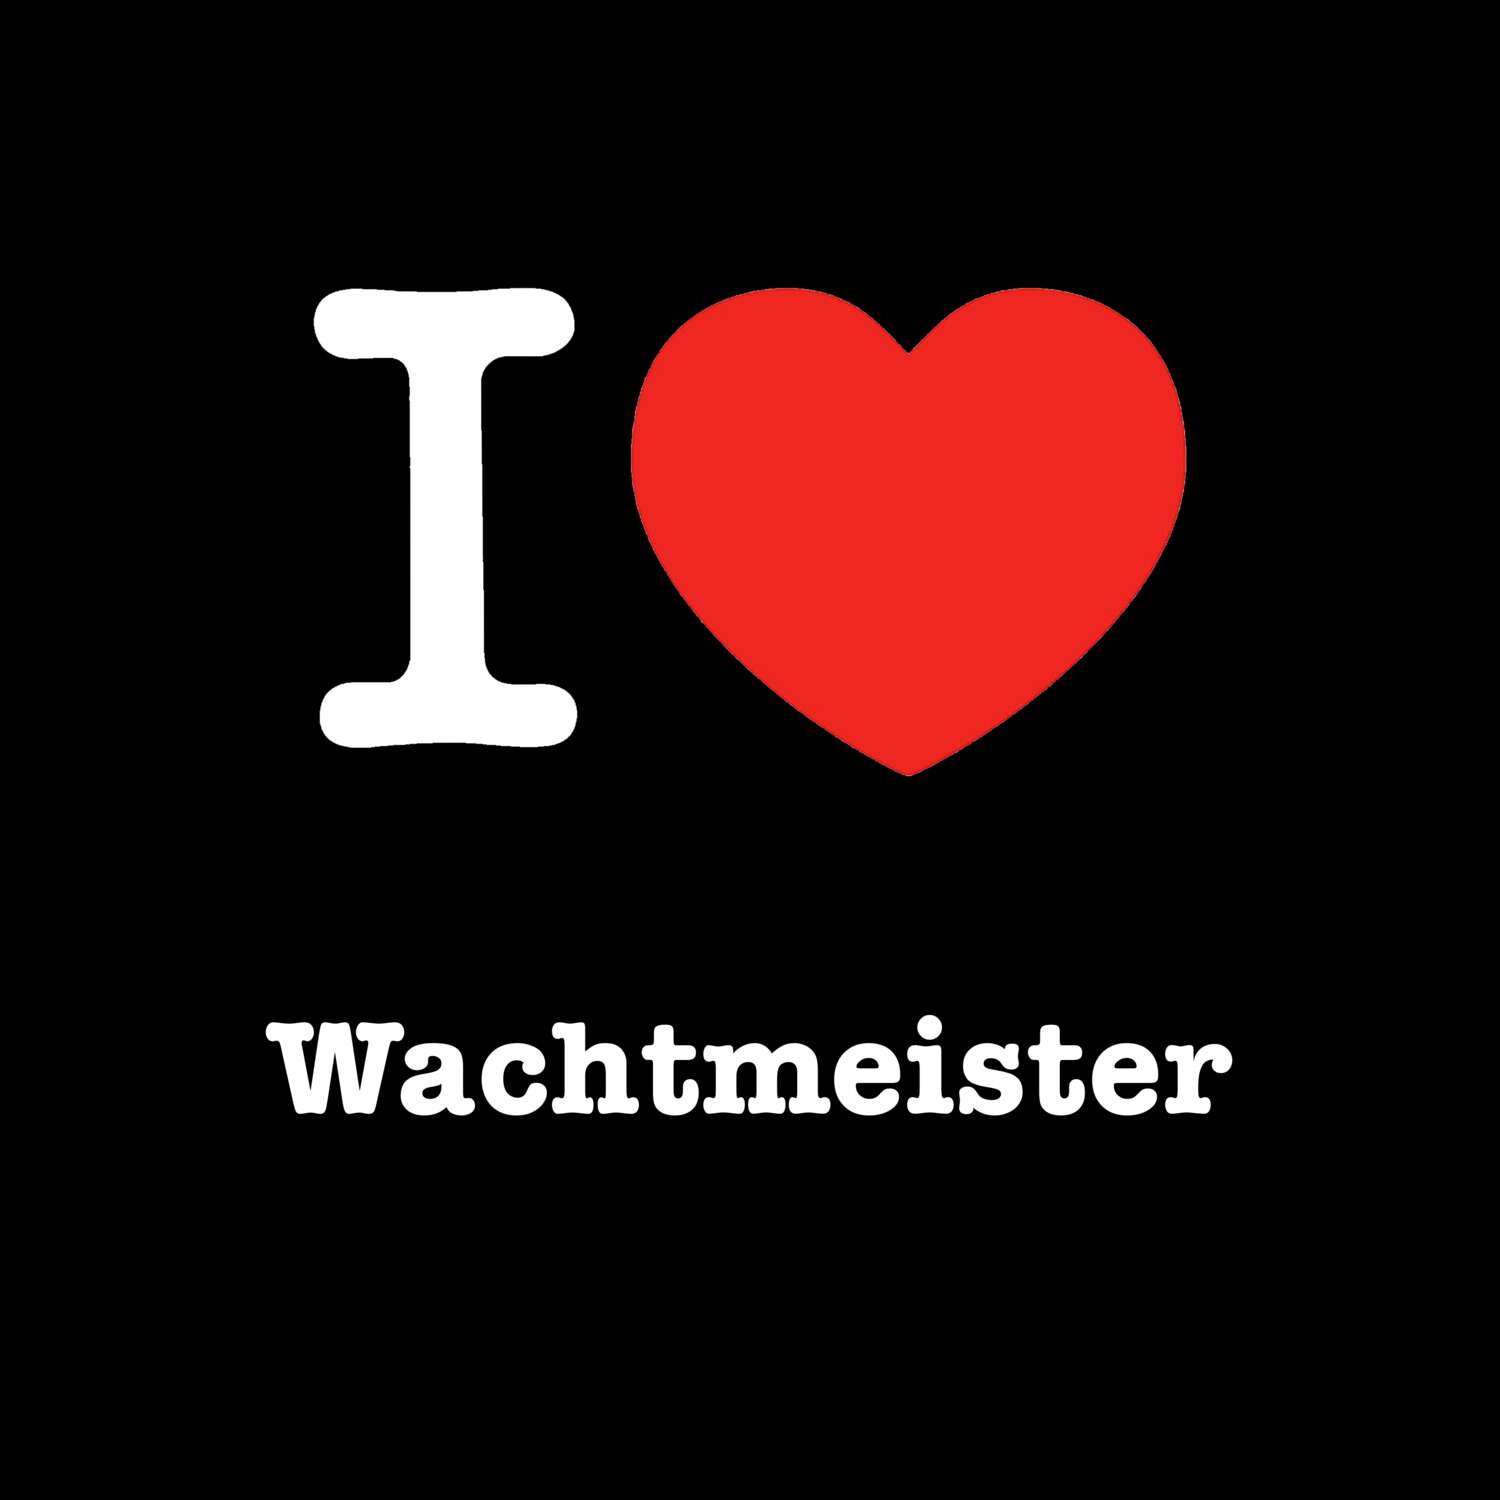 Wachtmeister T-Shirt »I love«